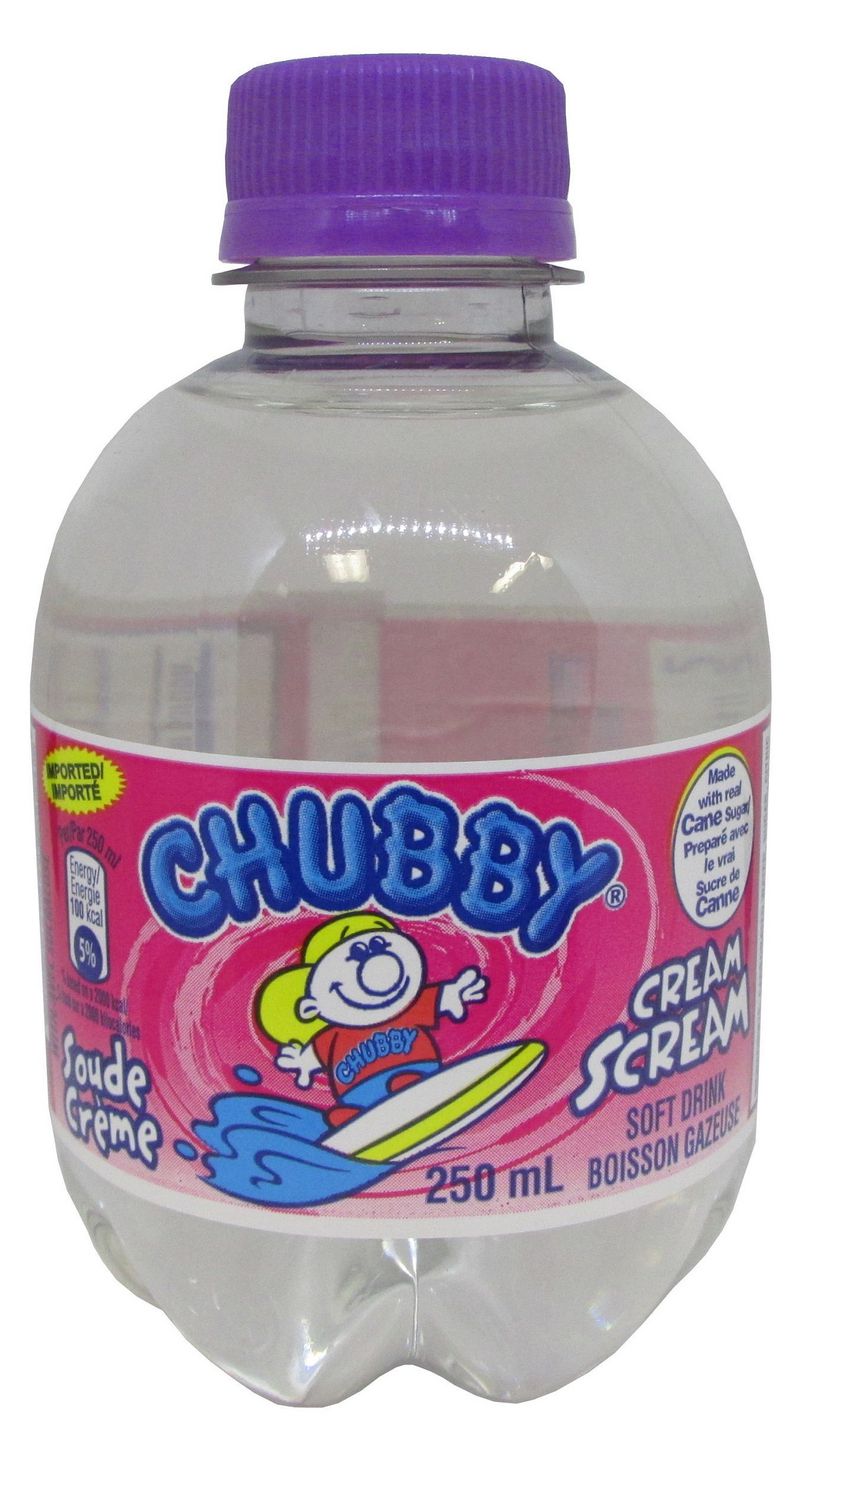 Chubby Cream Soda